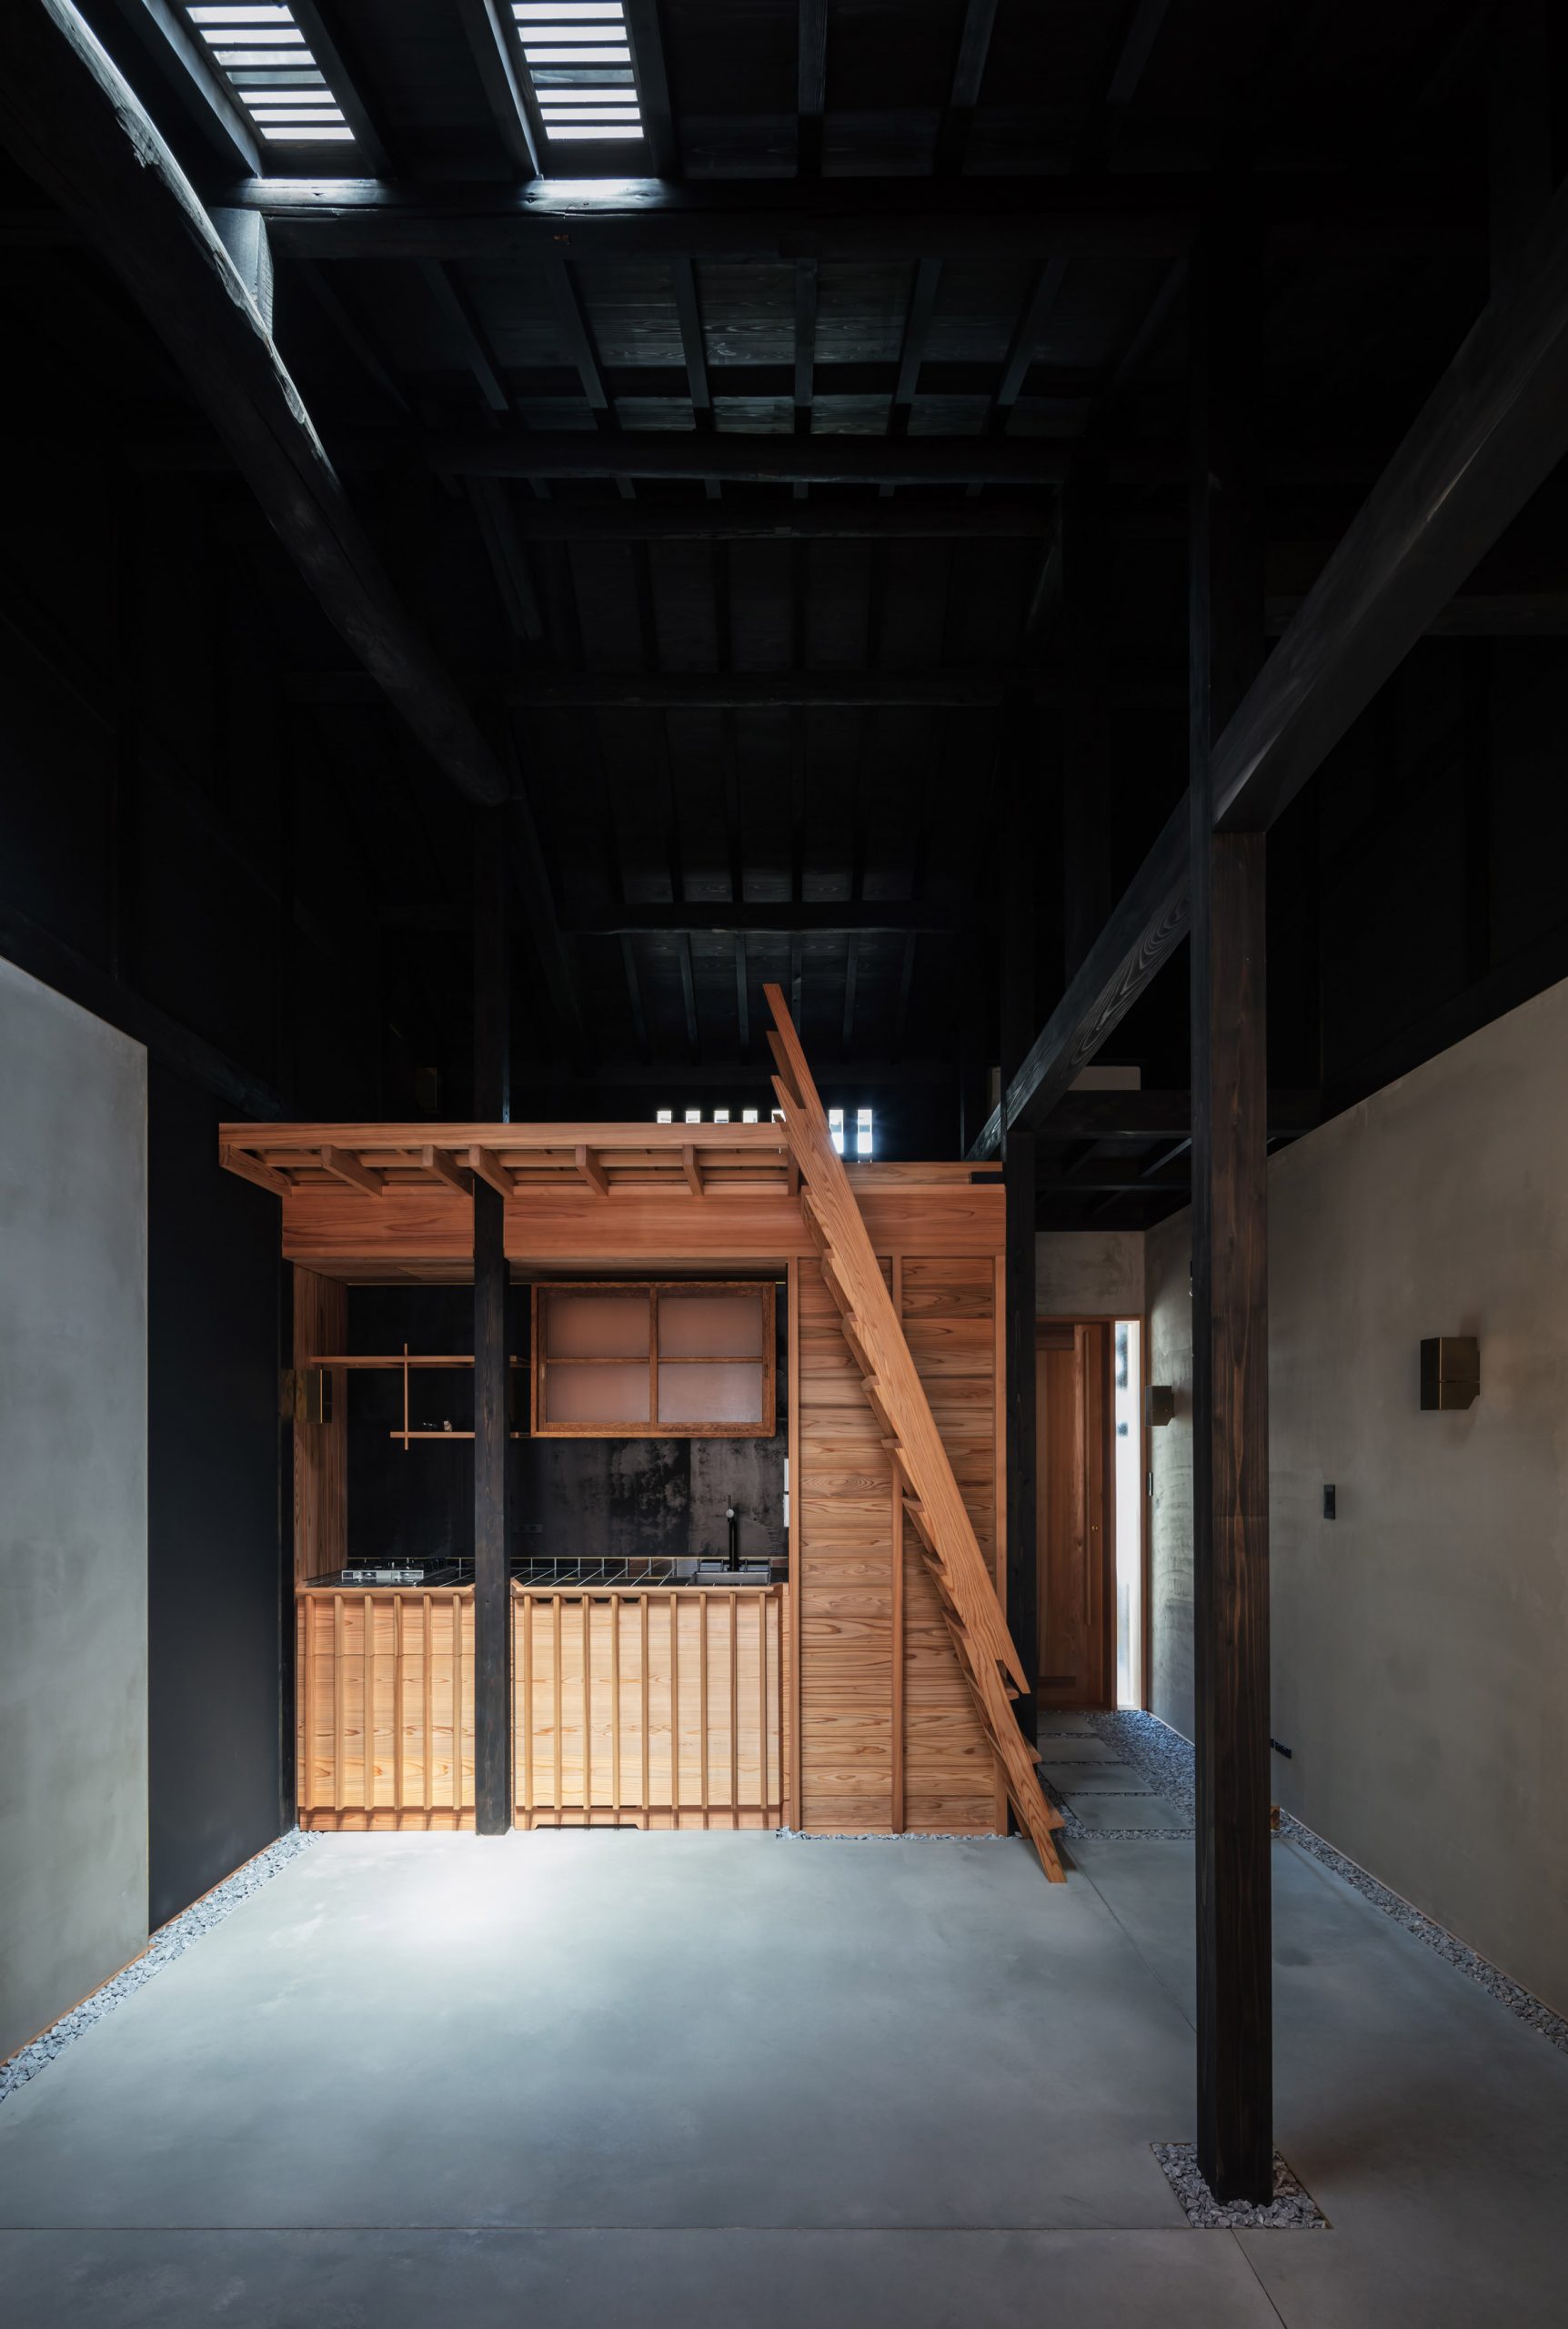 The dark interiors of a narrow Japanese house